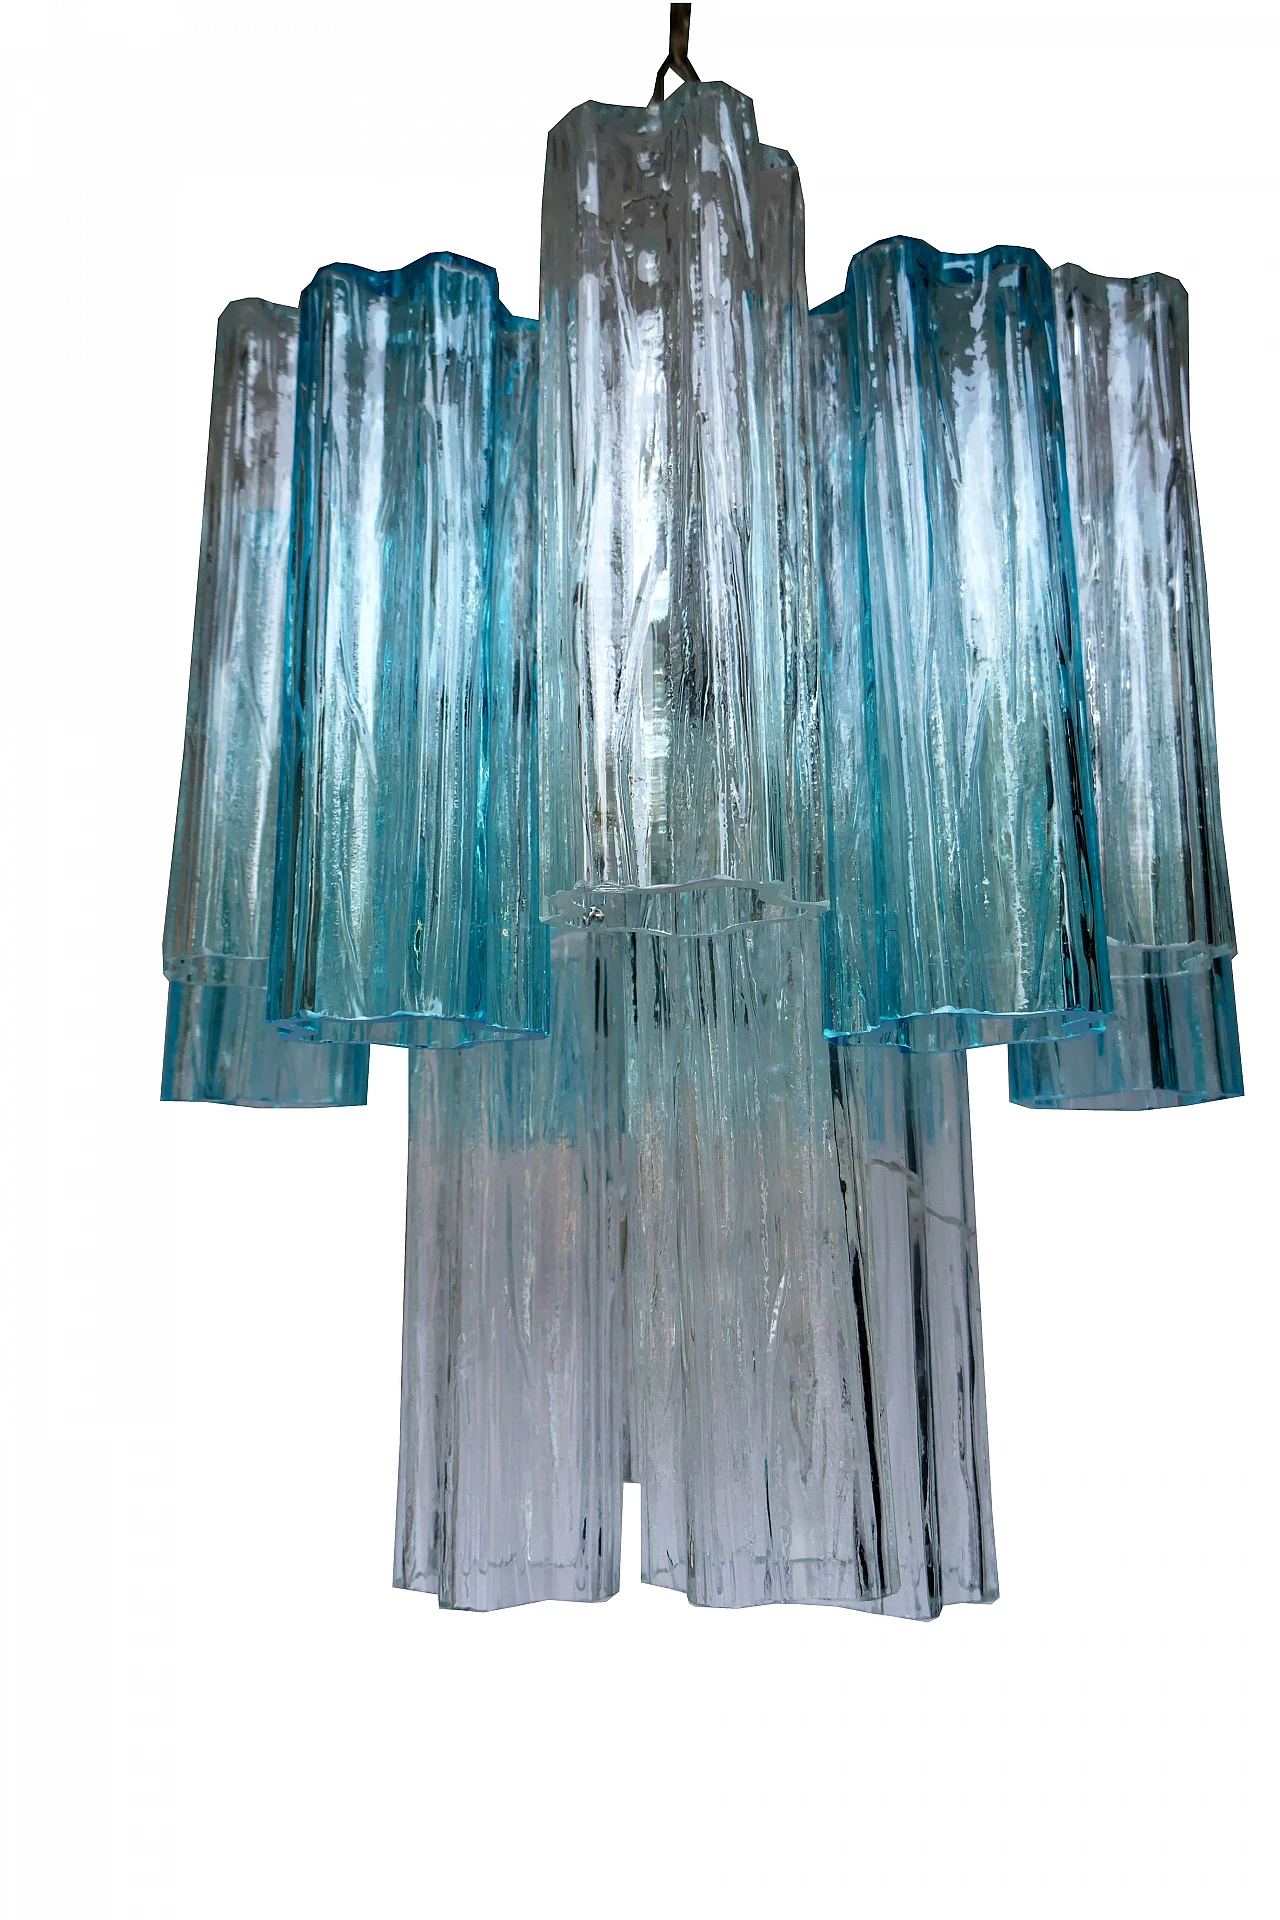 Tronchi glass chandelier for Venini, 1960s 5